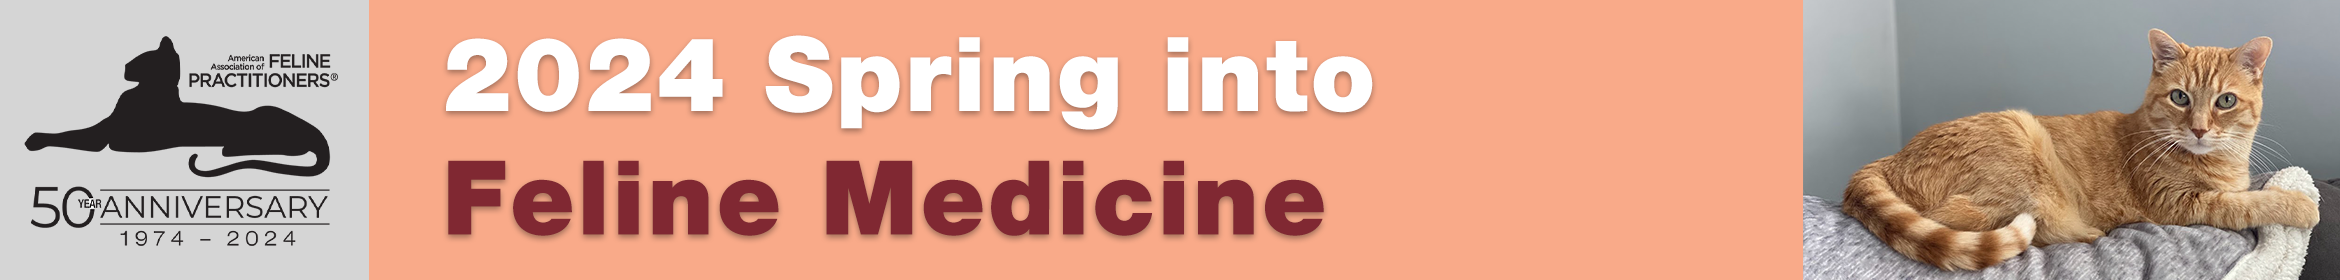 Spring into Feline Medicine 2024 Main banner